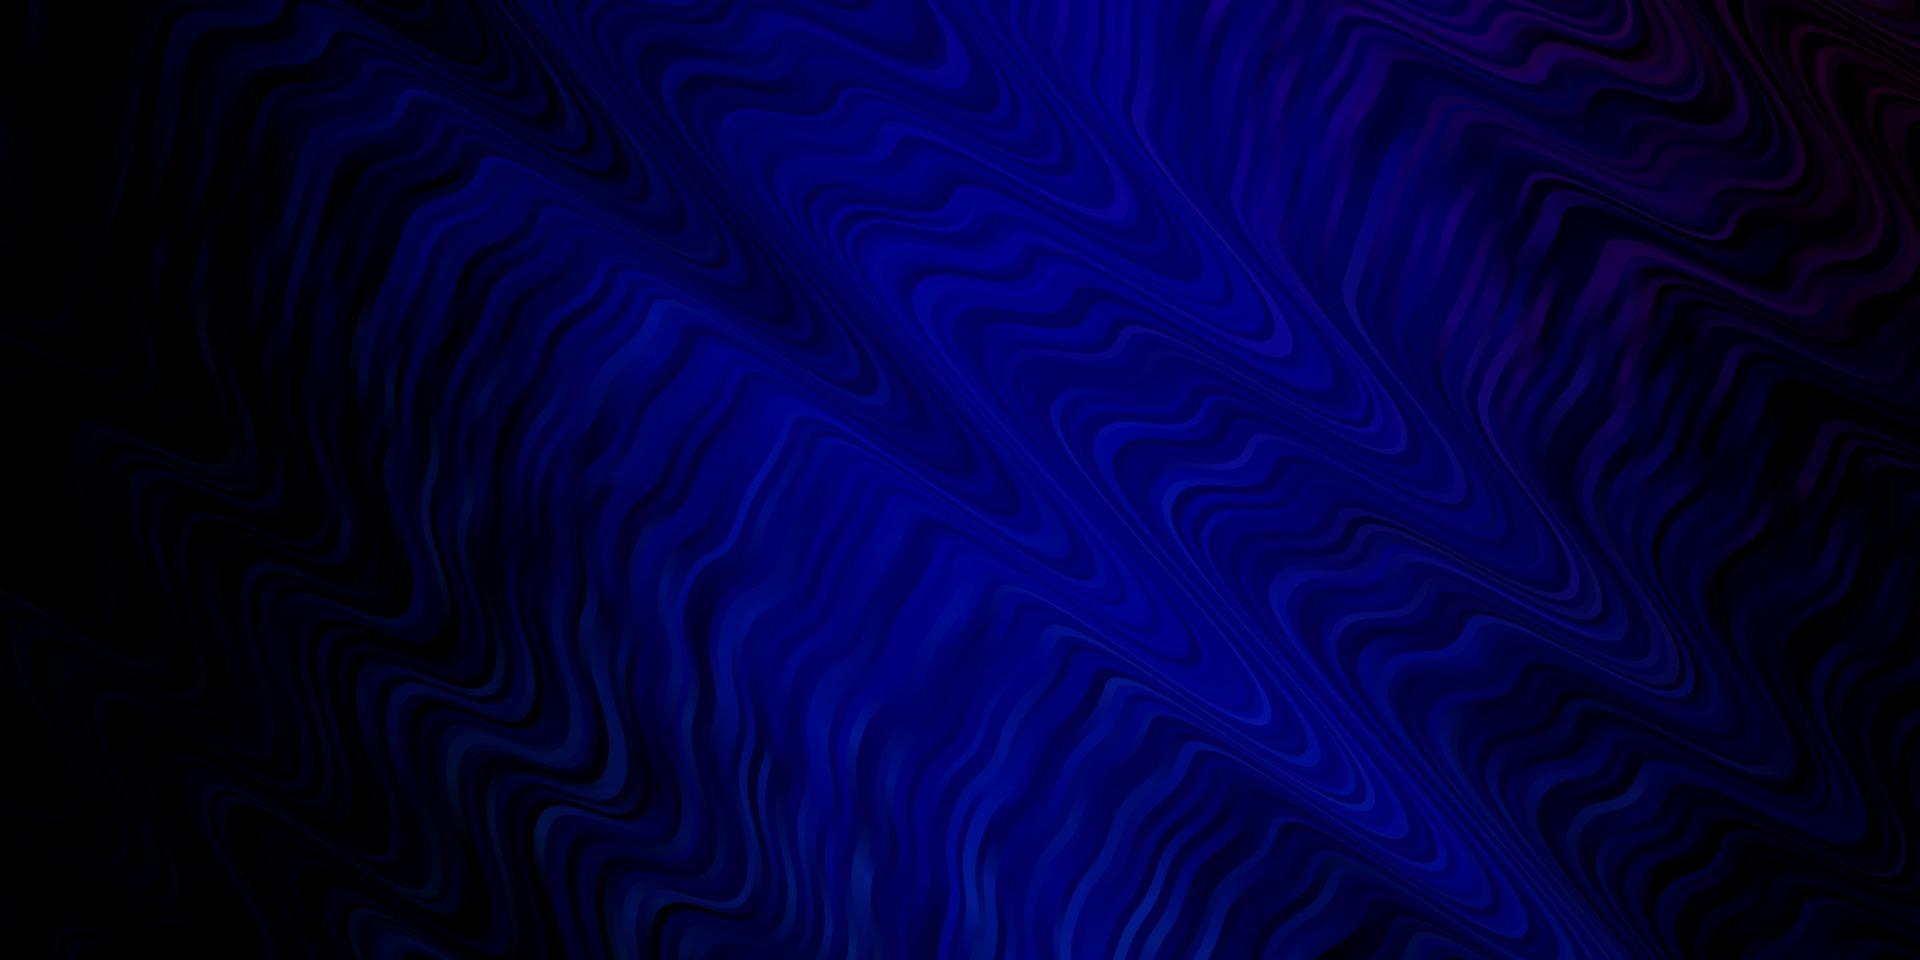 Dark Pink, Blue vector background with bent lines.